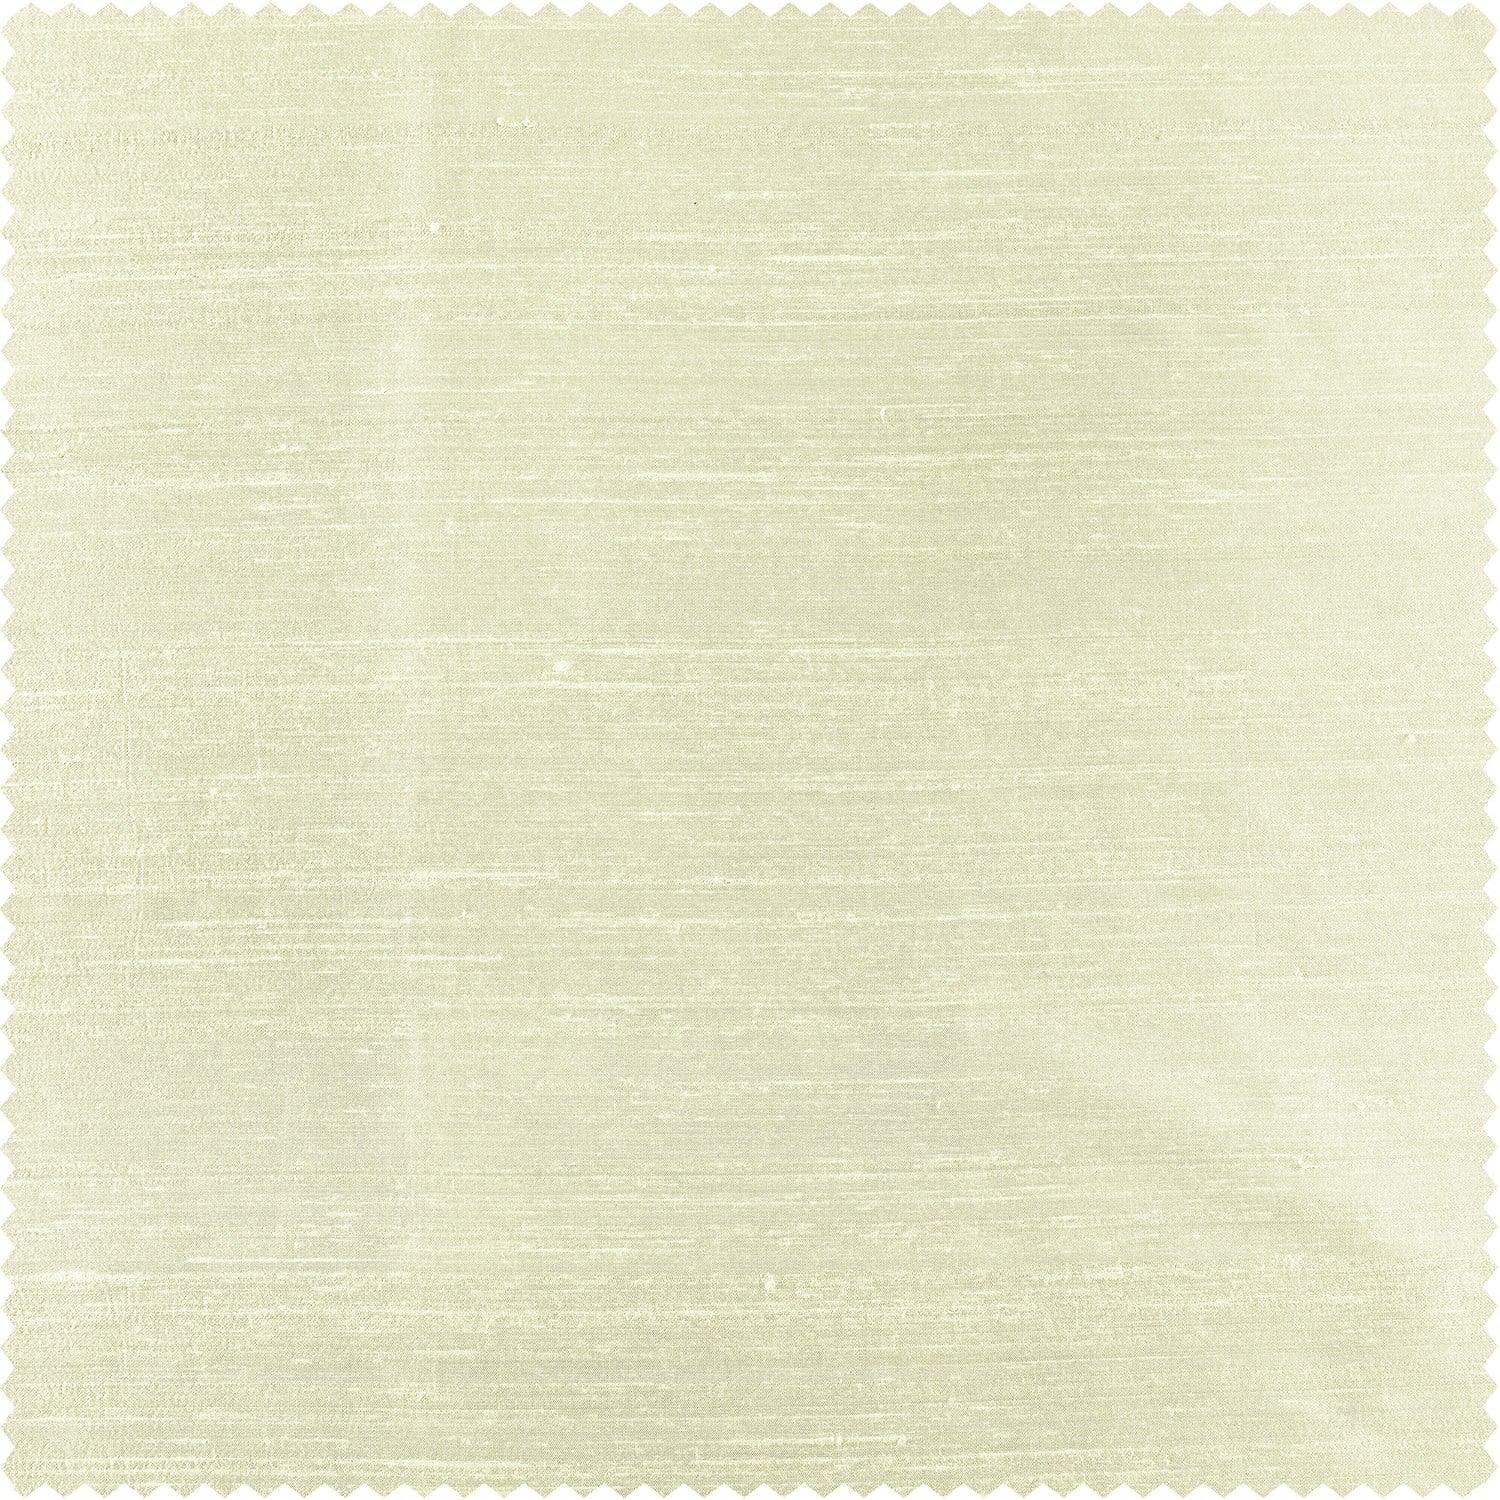 Pearl Textured Dupioni Silk Room Darkening Curtain